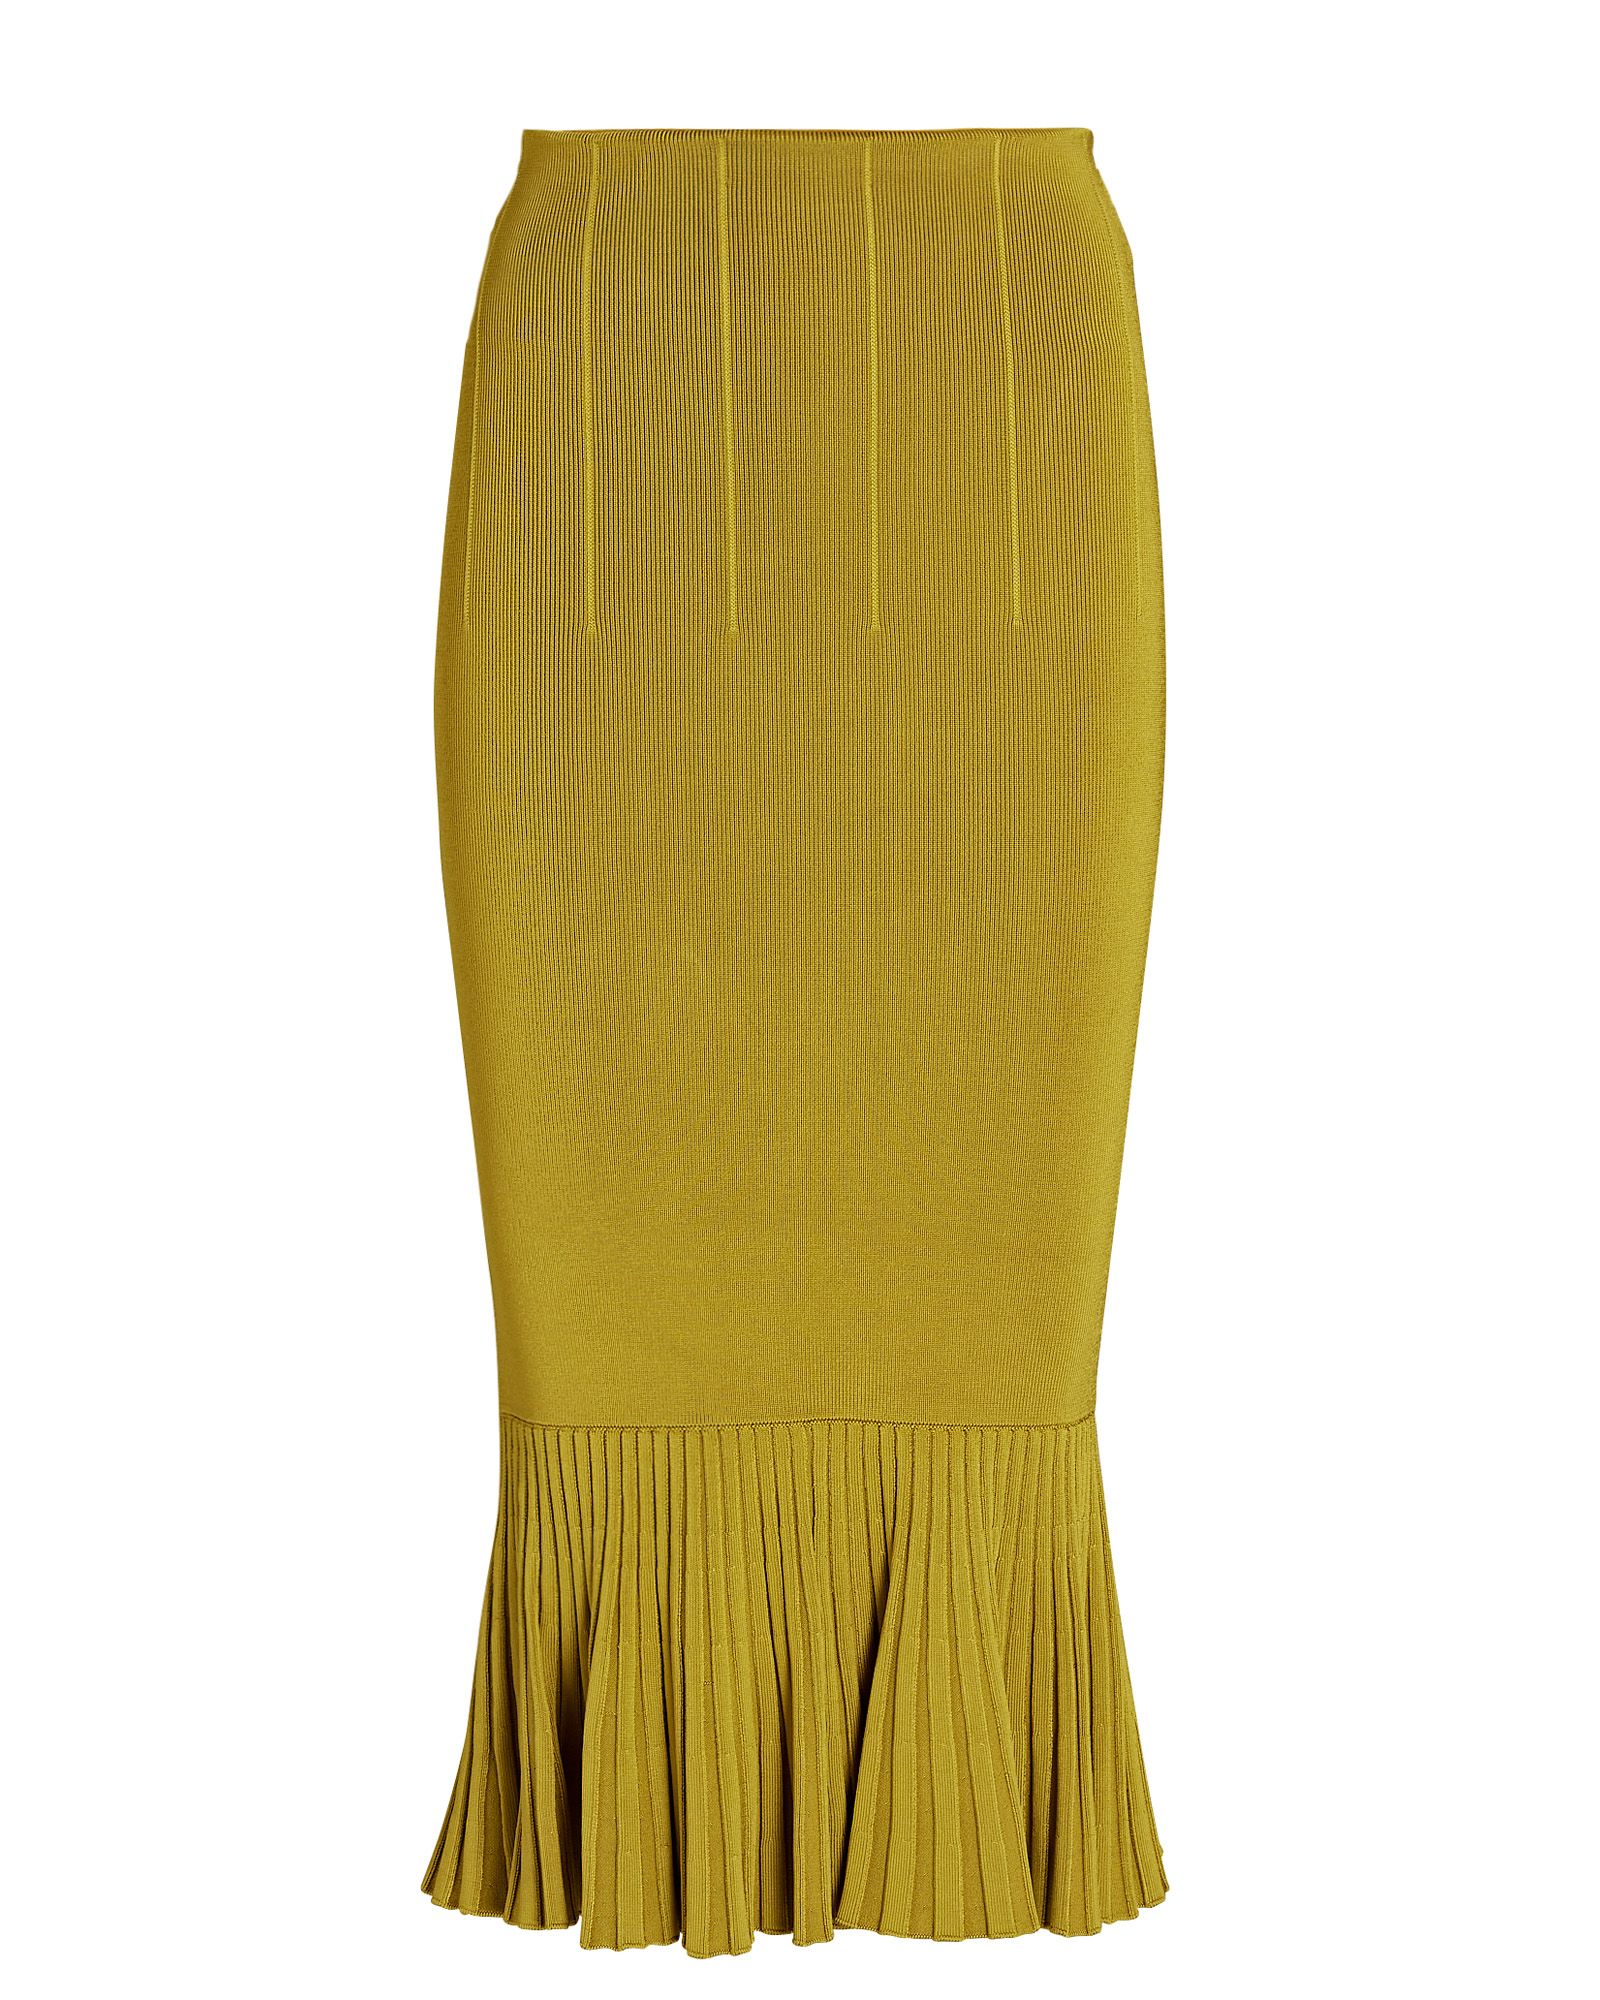 Galvan Atlanta Fluted Rib Knit Midi Skirt, Yellow S | INTERMIX